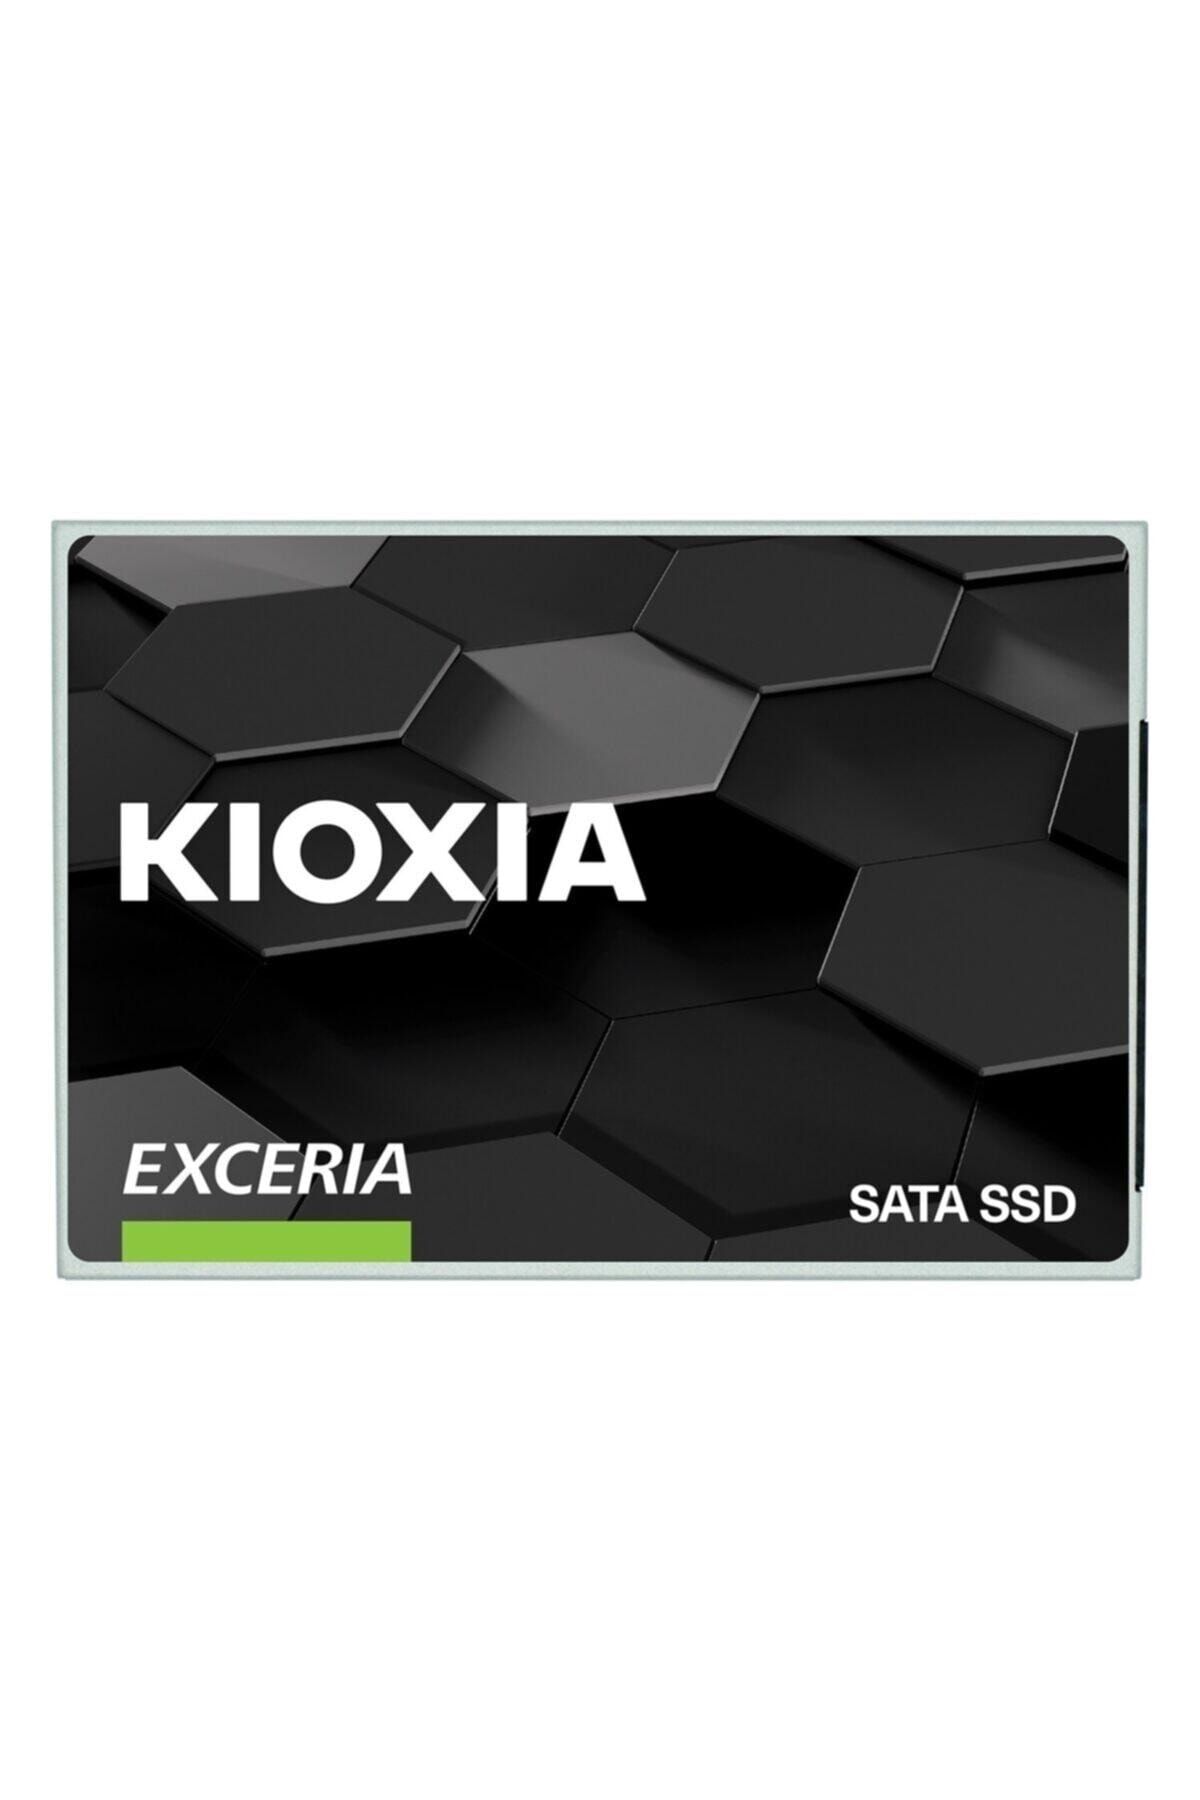 Kioxia Exceria 240gb Ltc10z240gg8 555/540mb/s 2.5" 3d Flash Sata